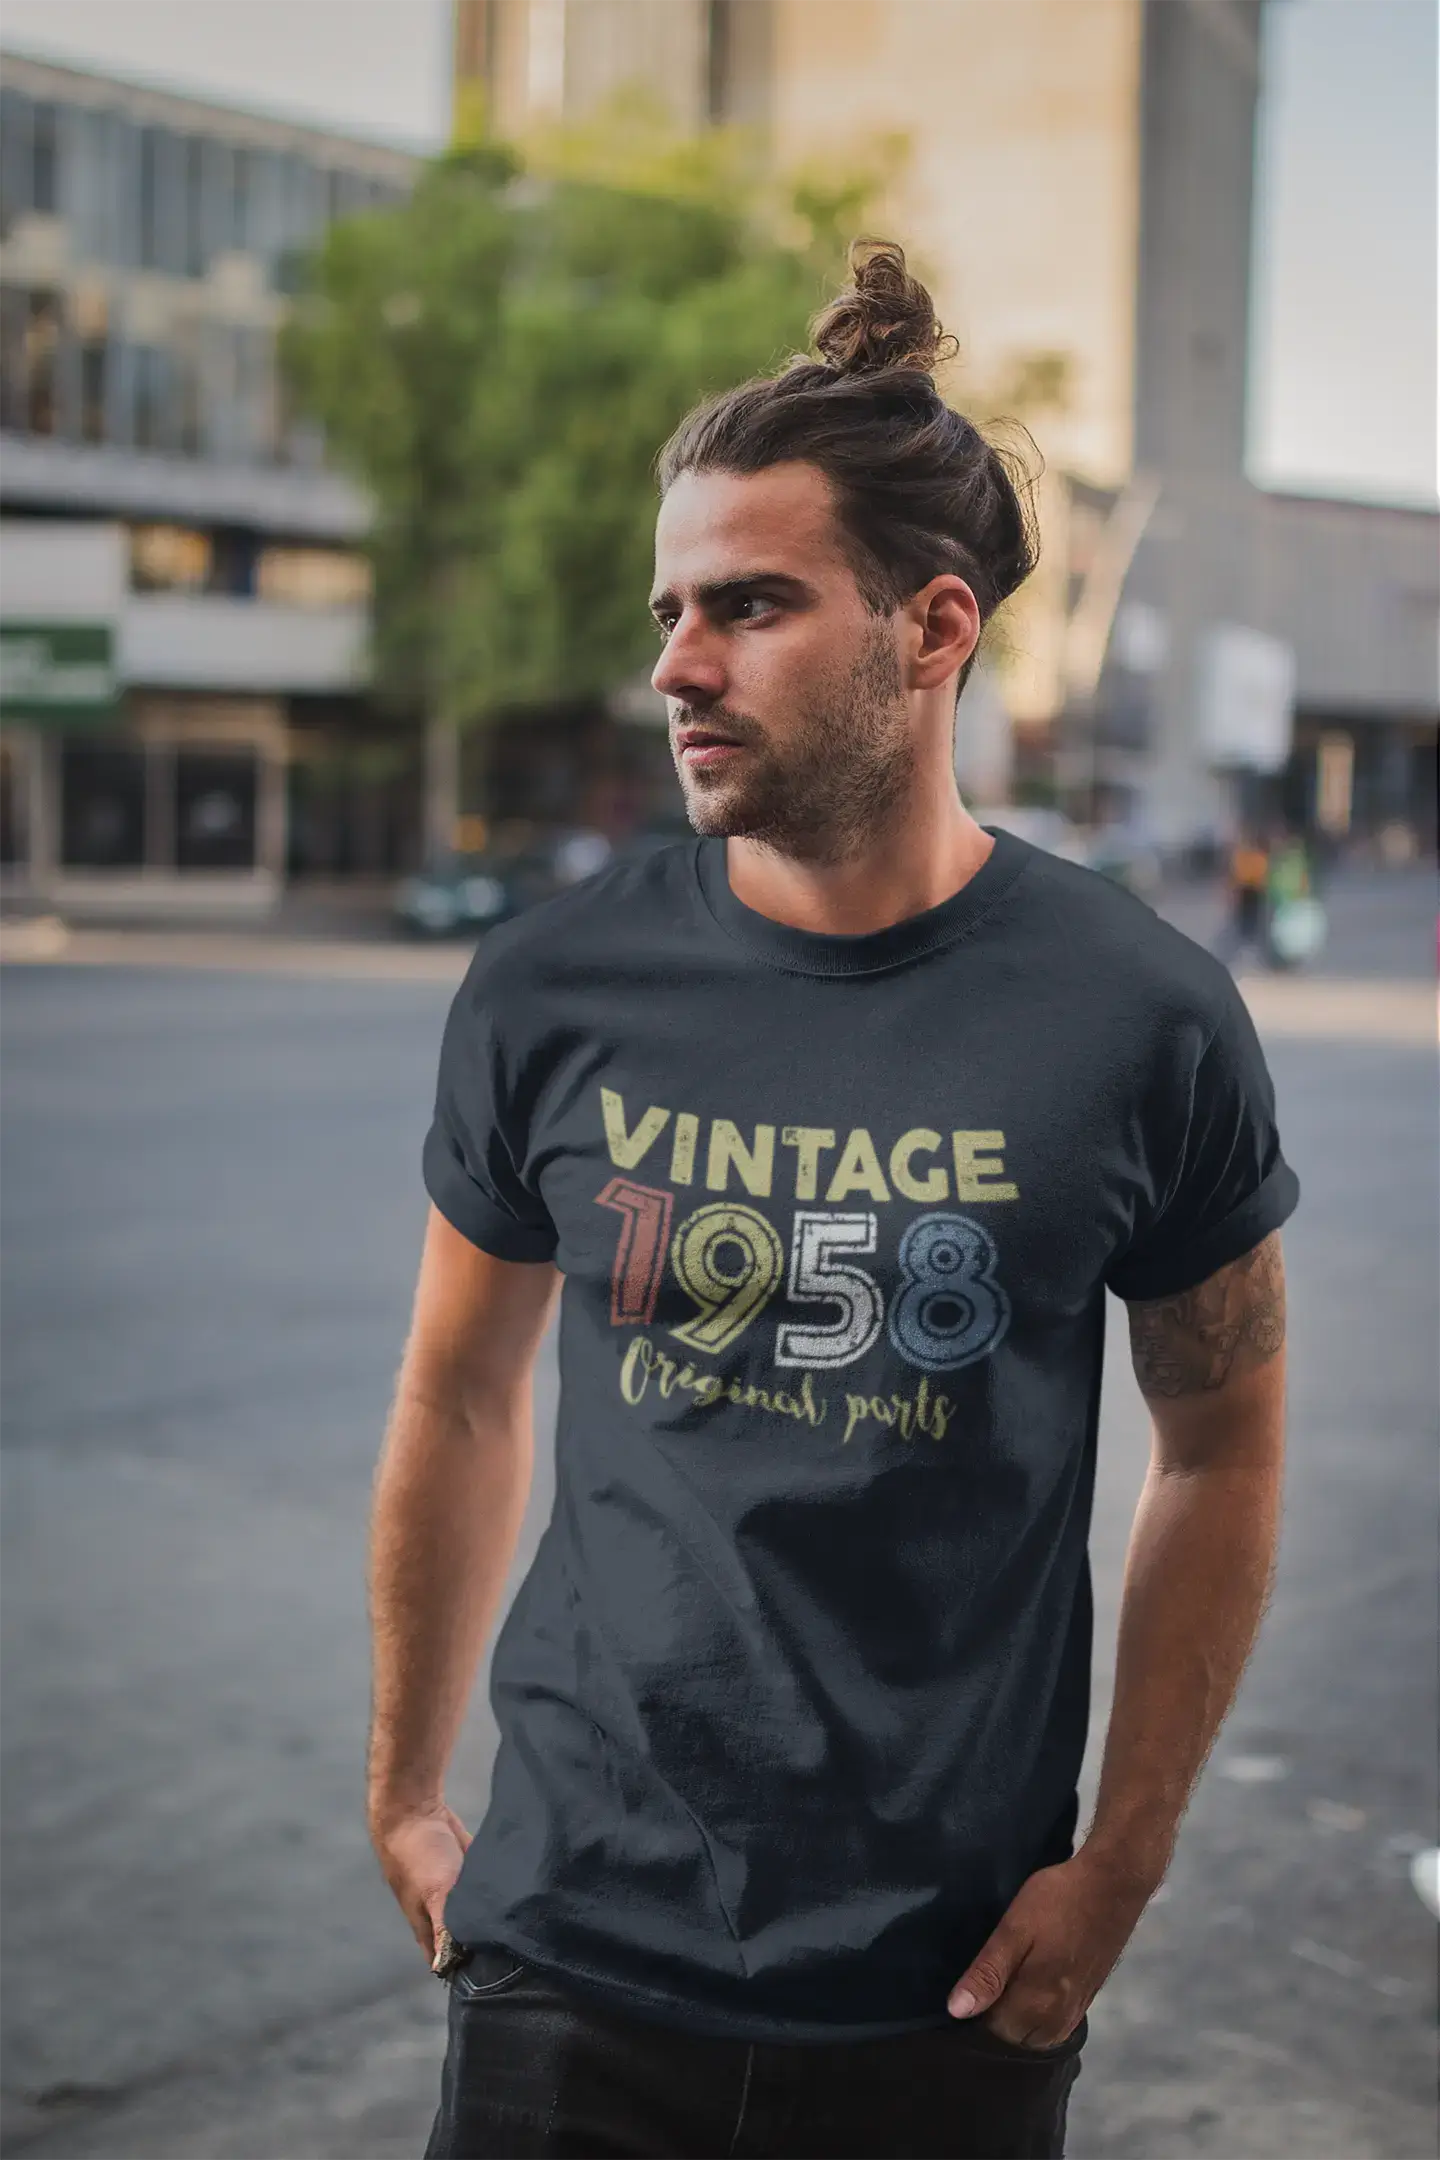 ULTRABASIC - Graphic Printed Men's Vintage 1958 T-Shirt Denim